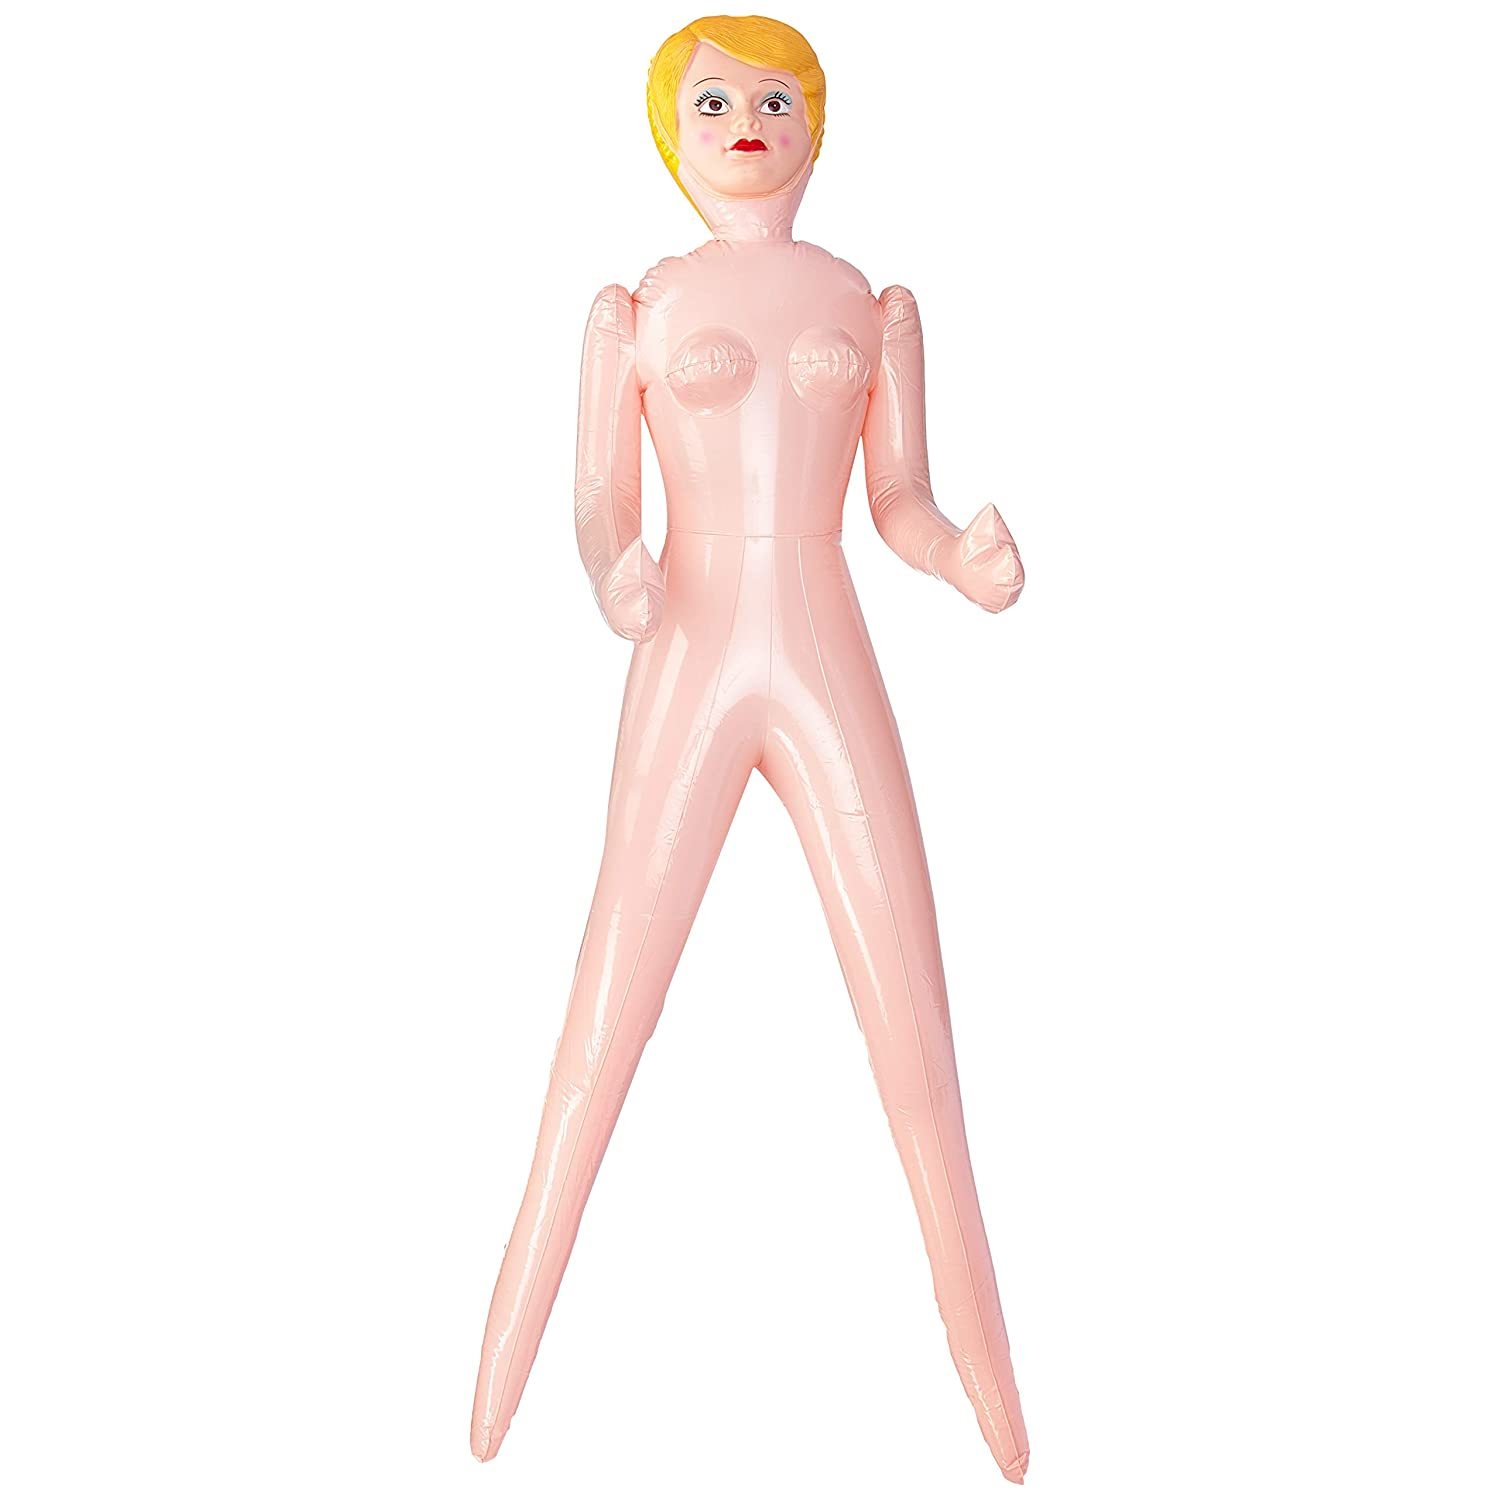 Loftus Joker Judy The Inflatable Friend Y 5' Gag Gift, Beige, One Size